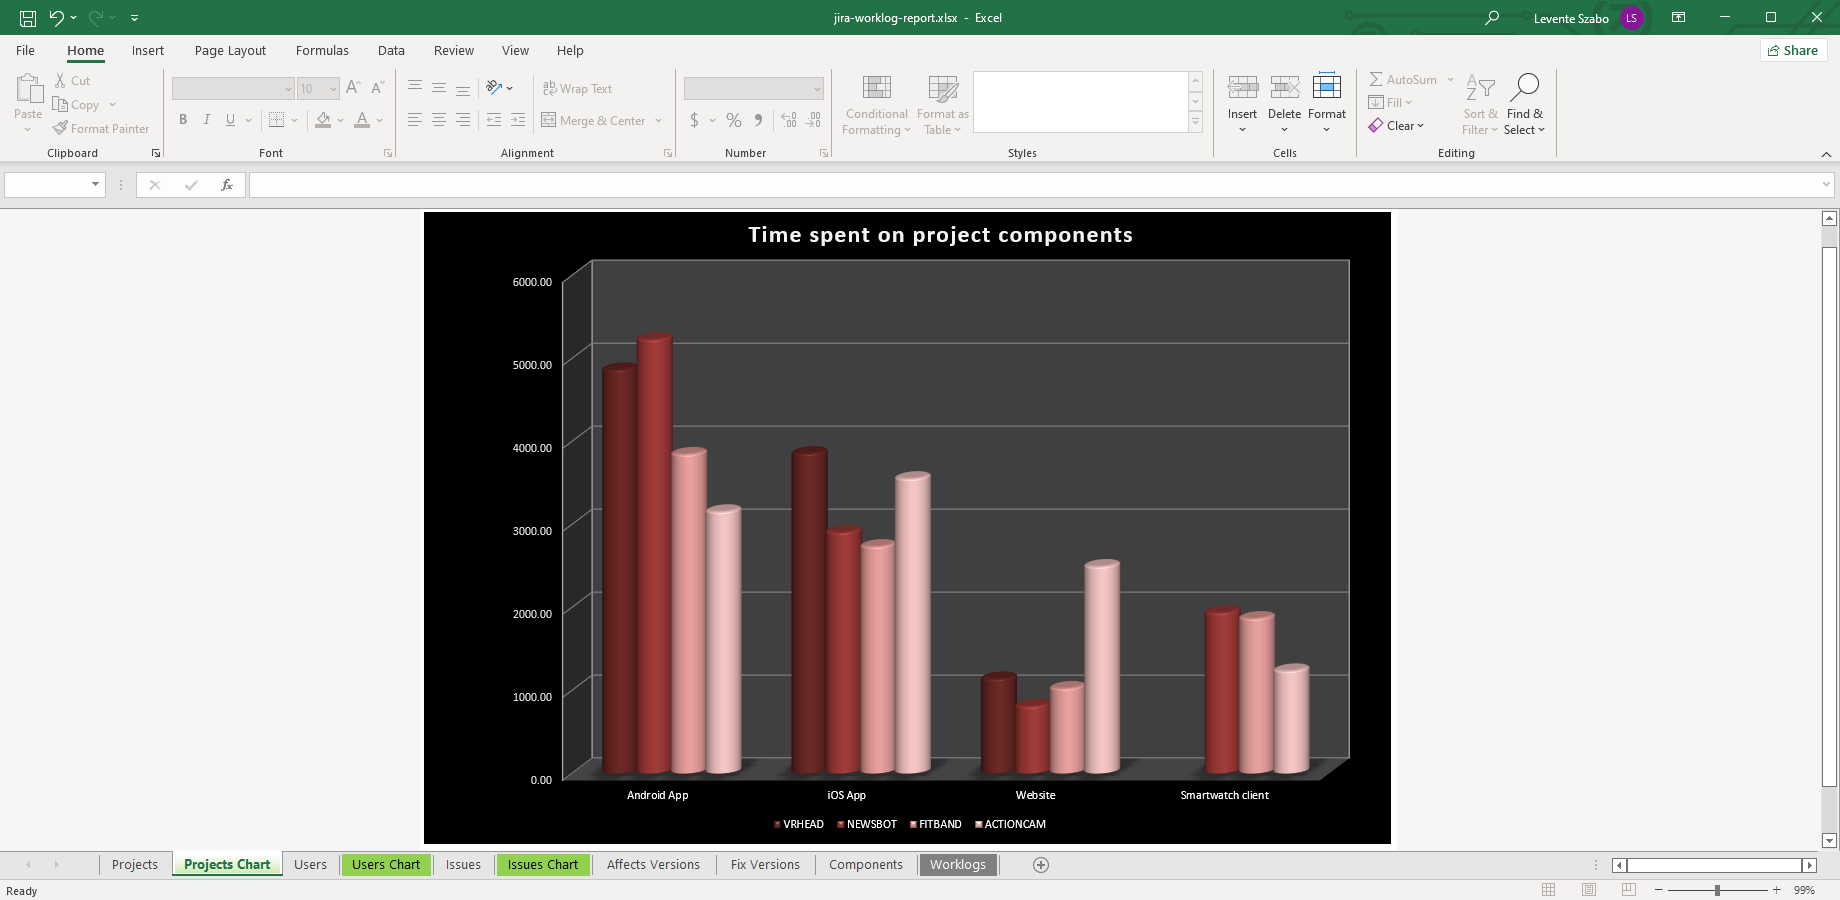 Cross-project per-component worklog report